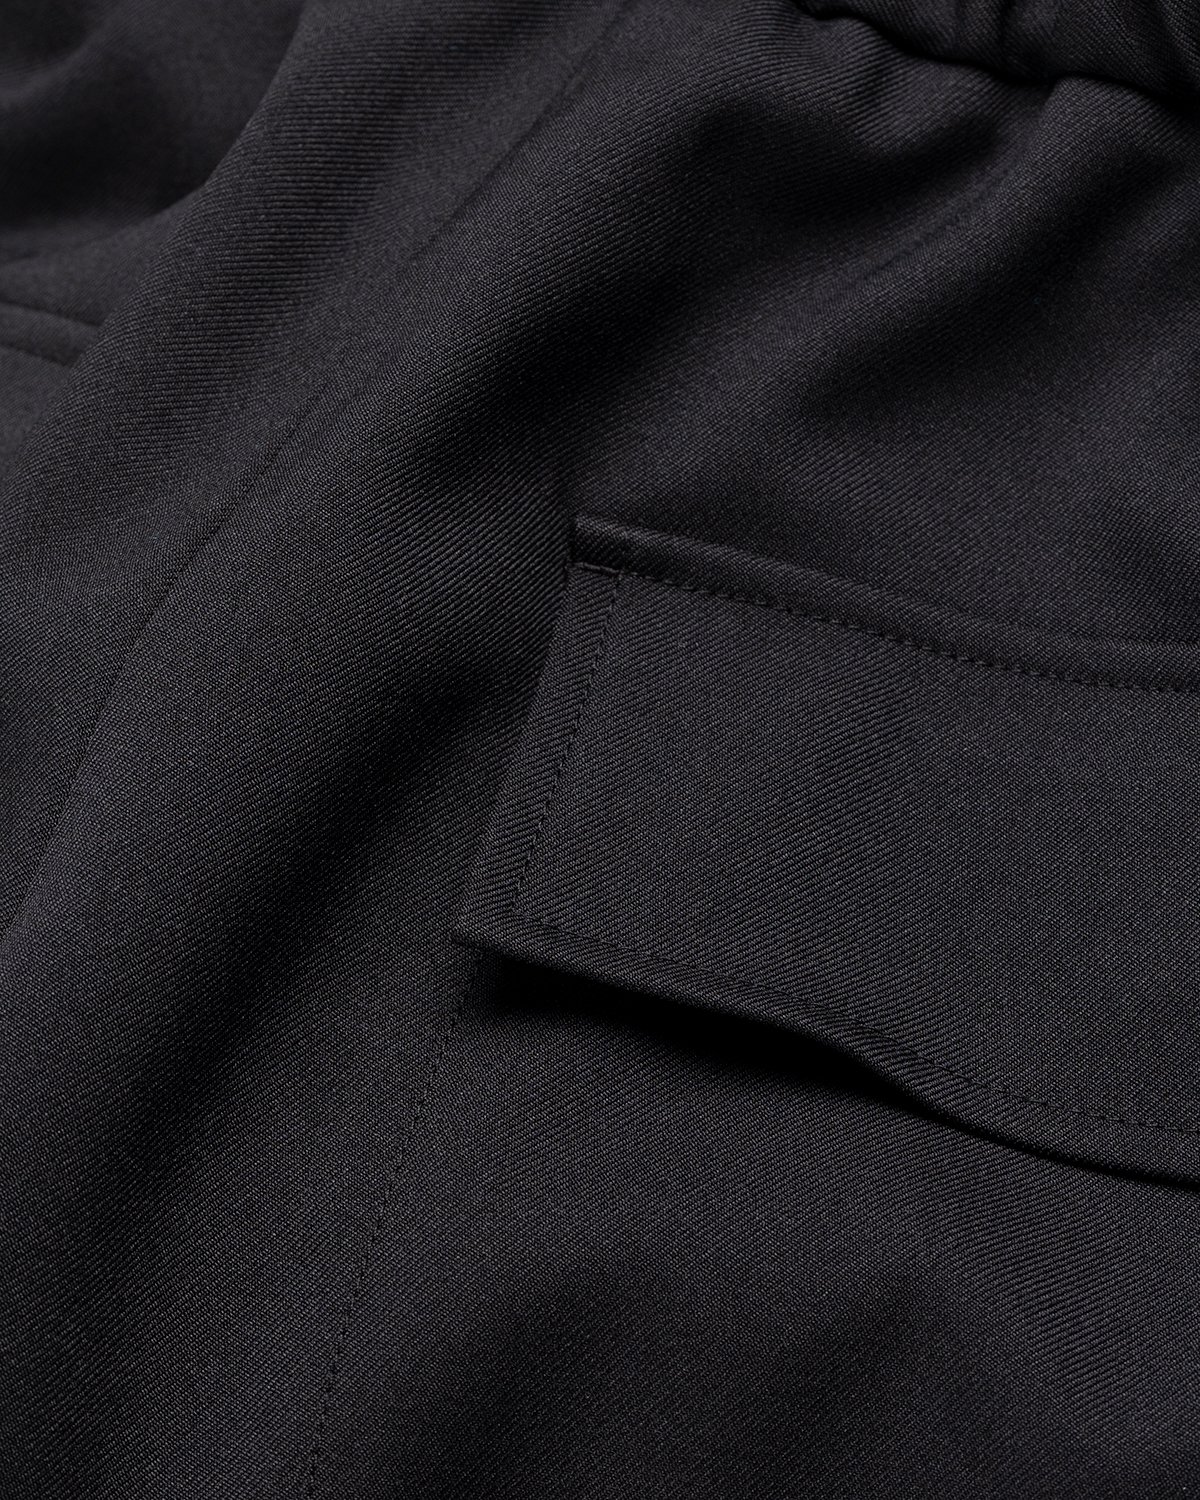 Jil Sander - Trouser D 09 AW 20 Black - Clothing - Black - Image 5